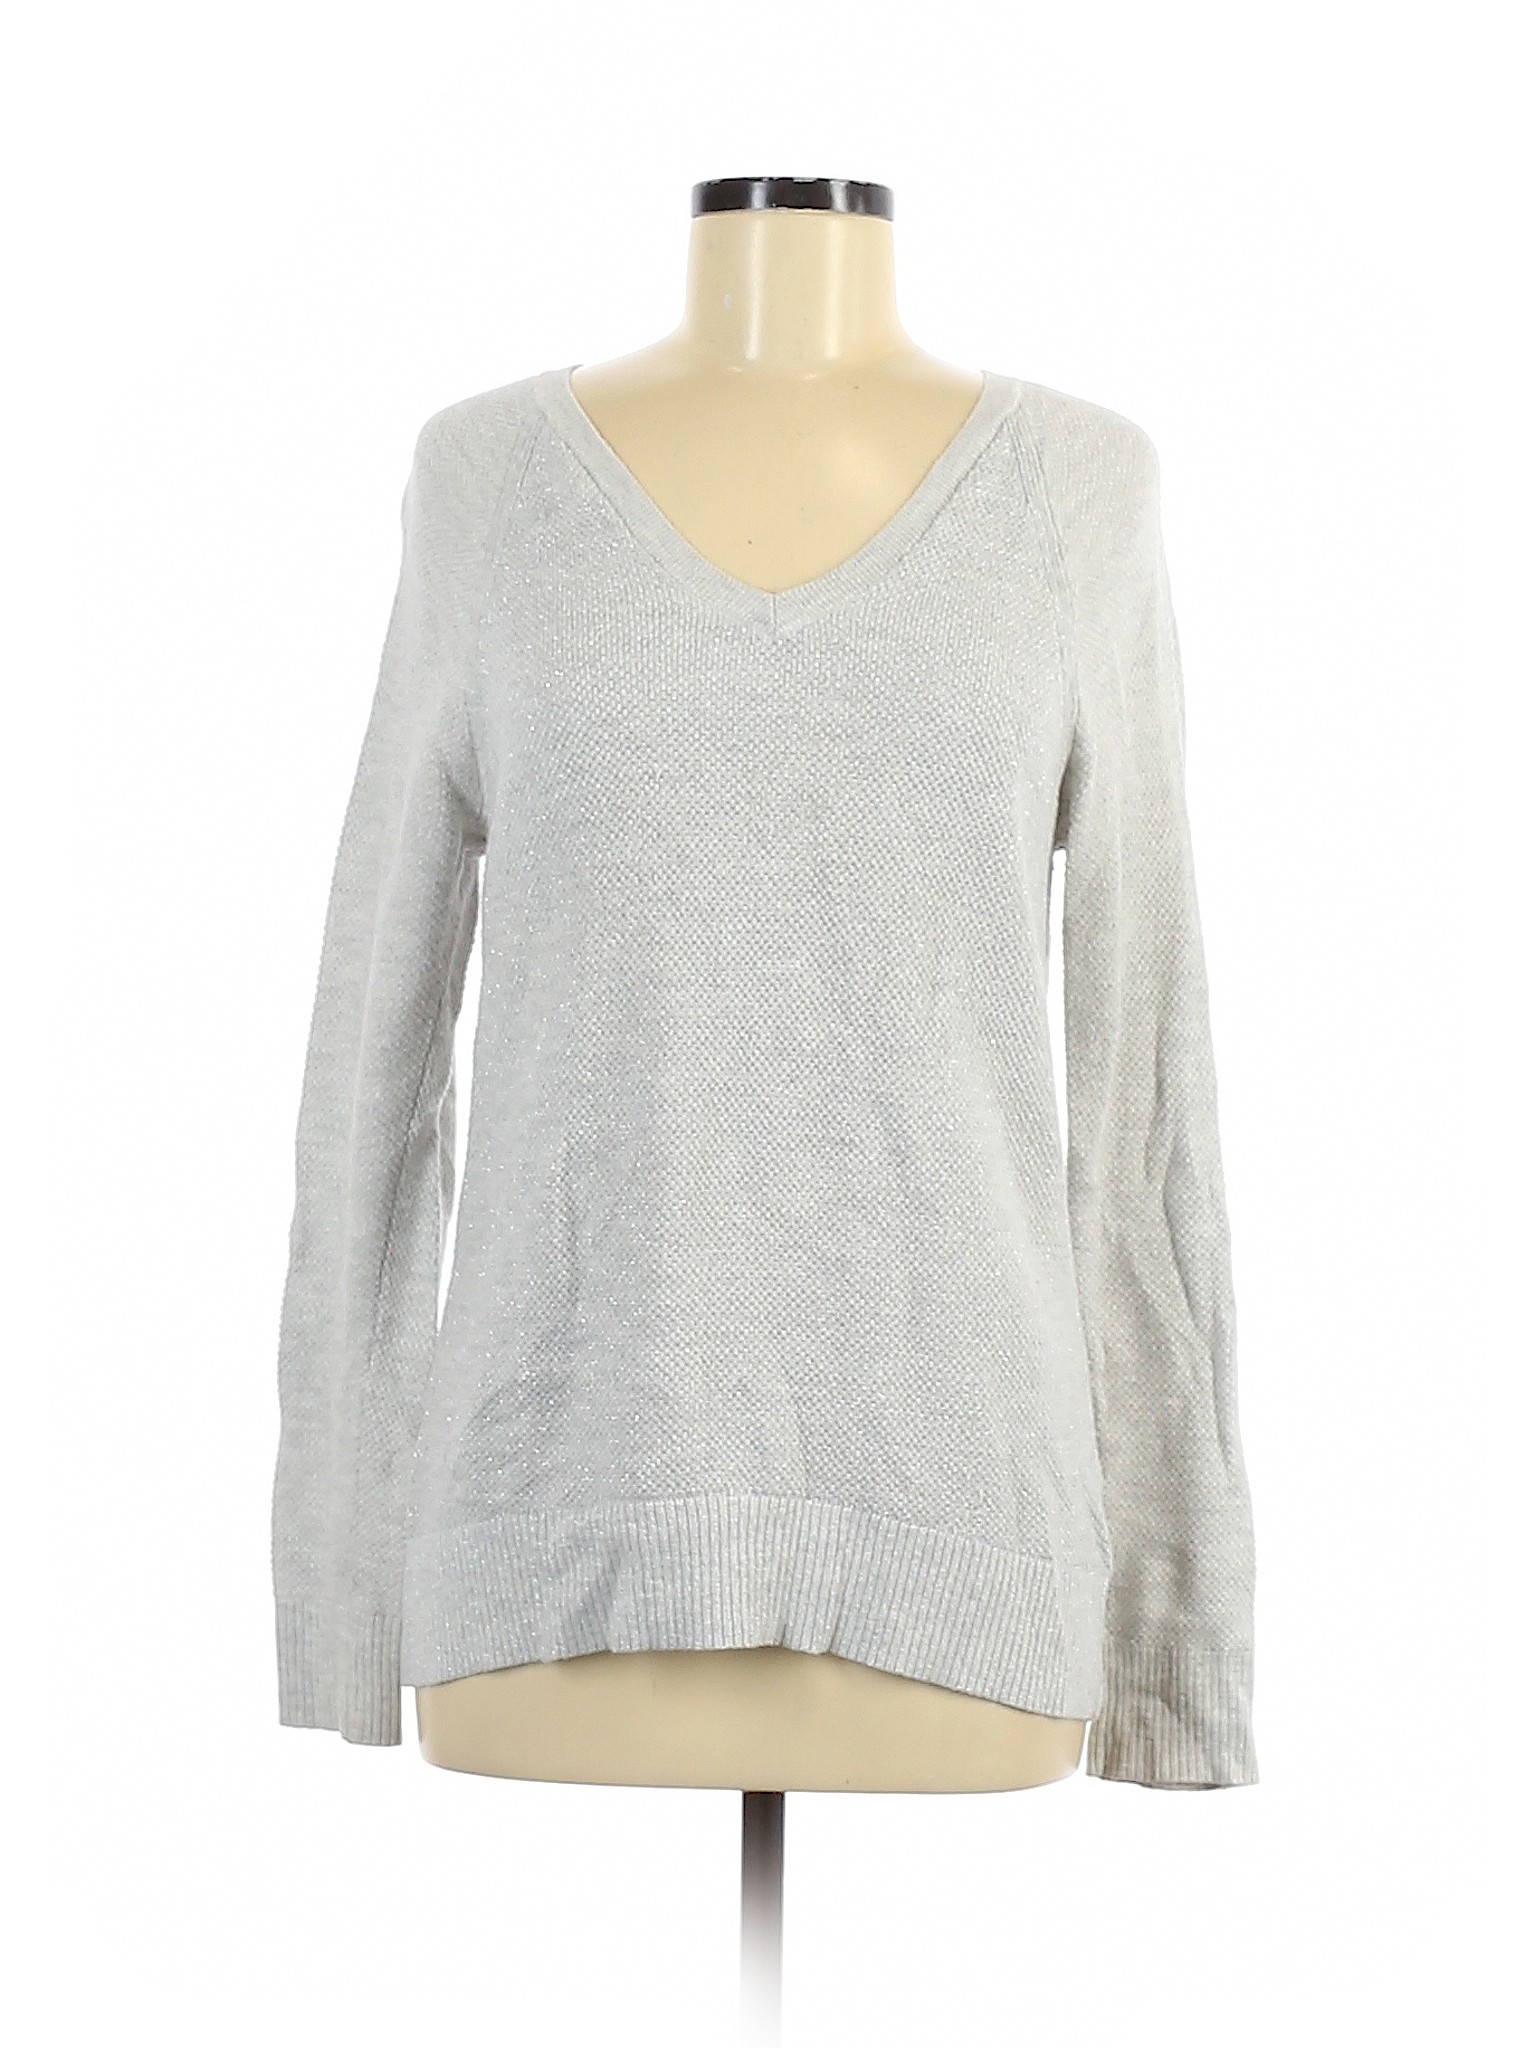 Gap Women White Pullover Sweater M | eBay